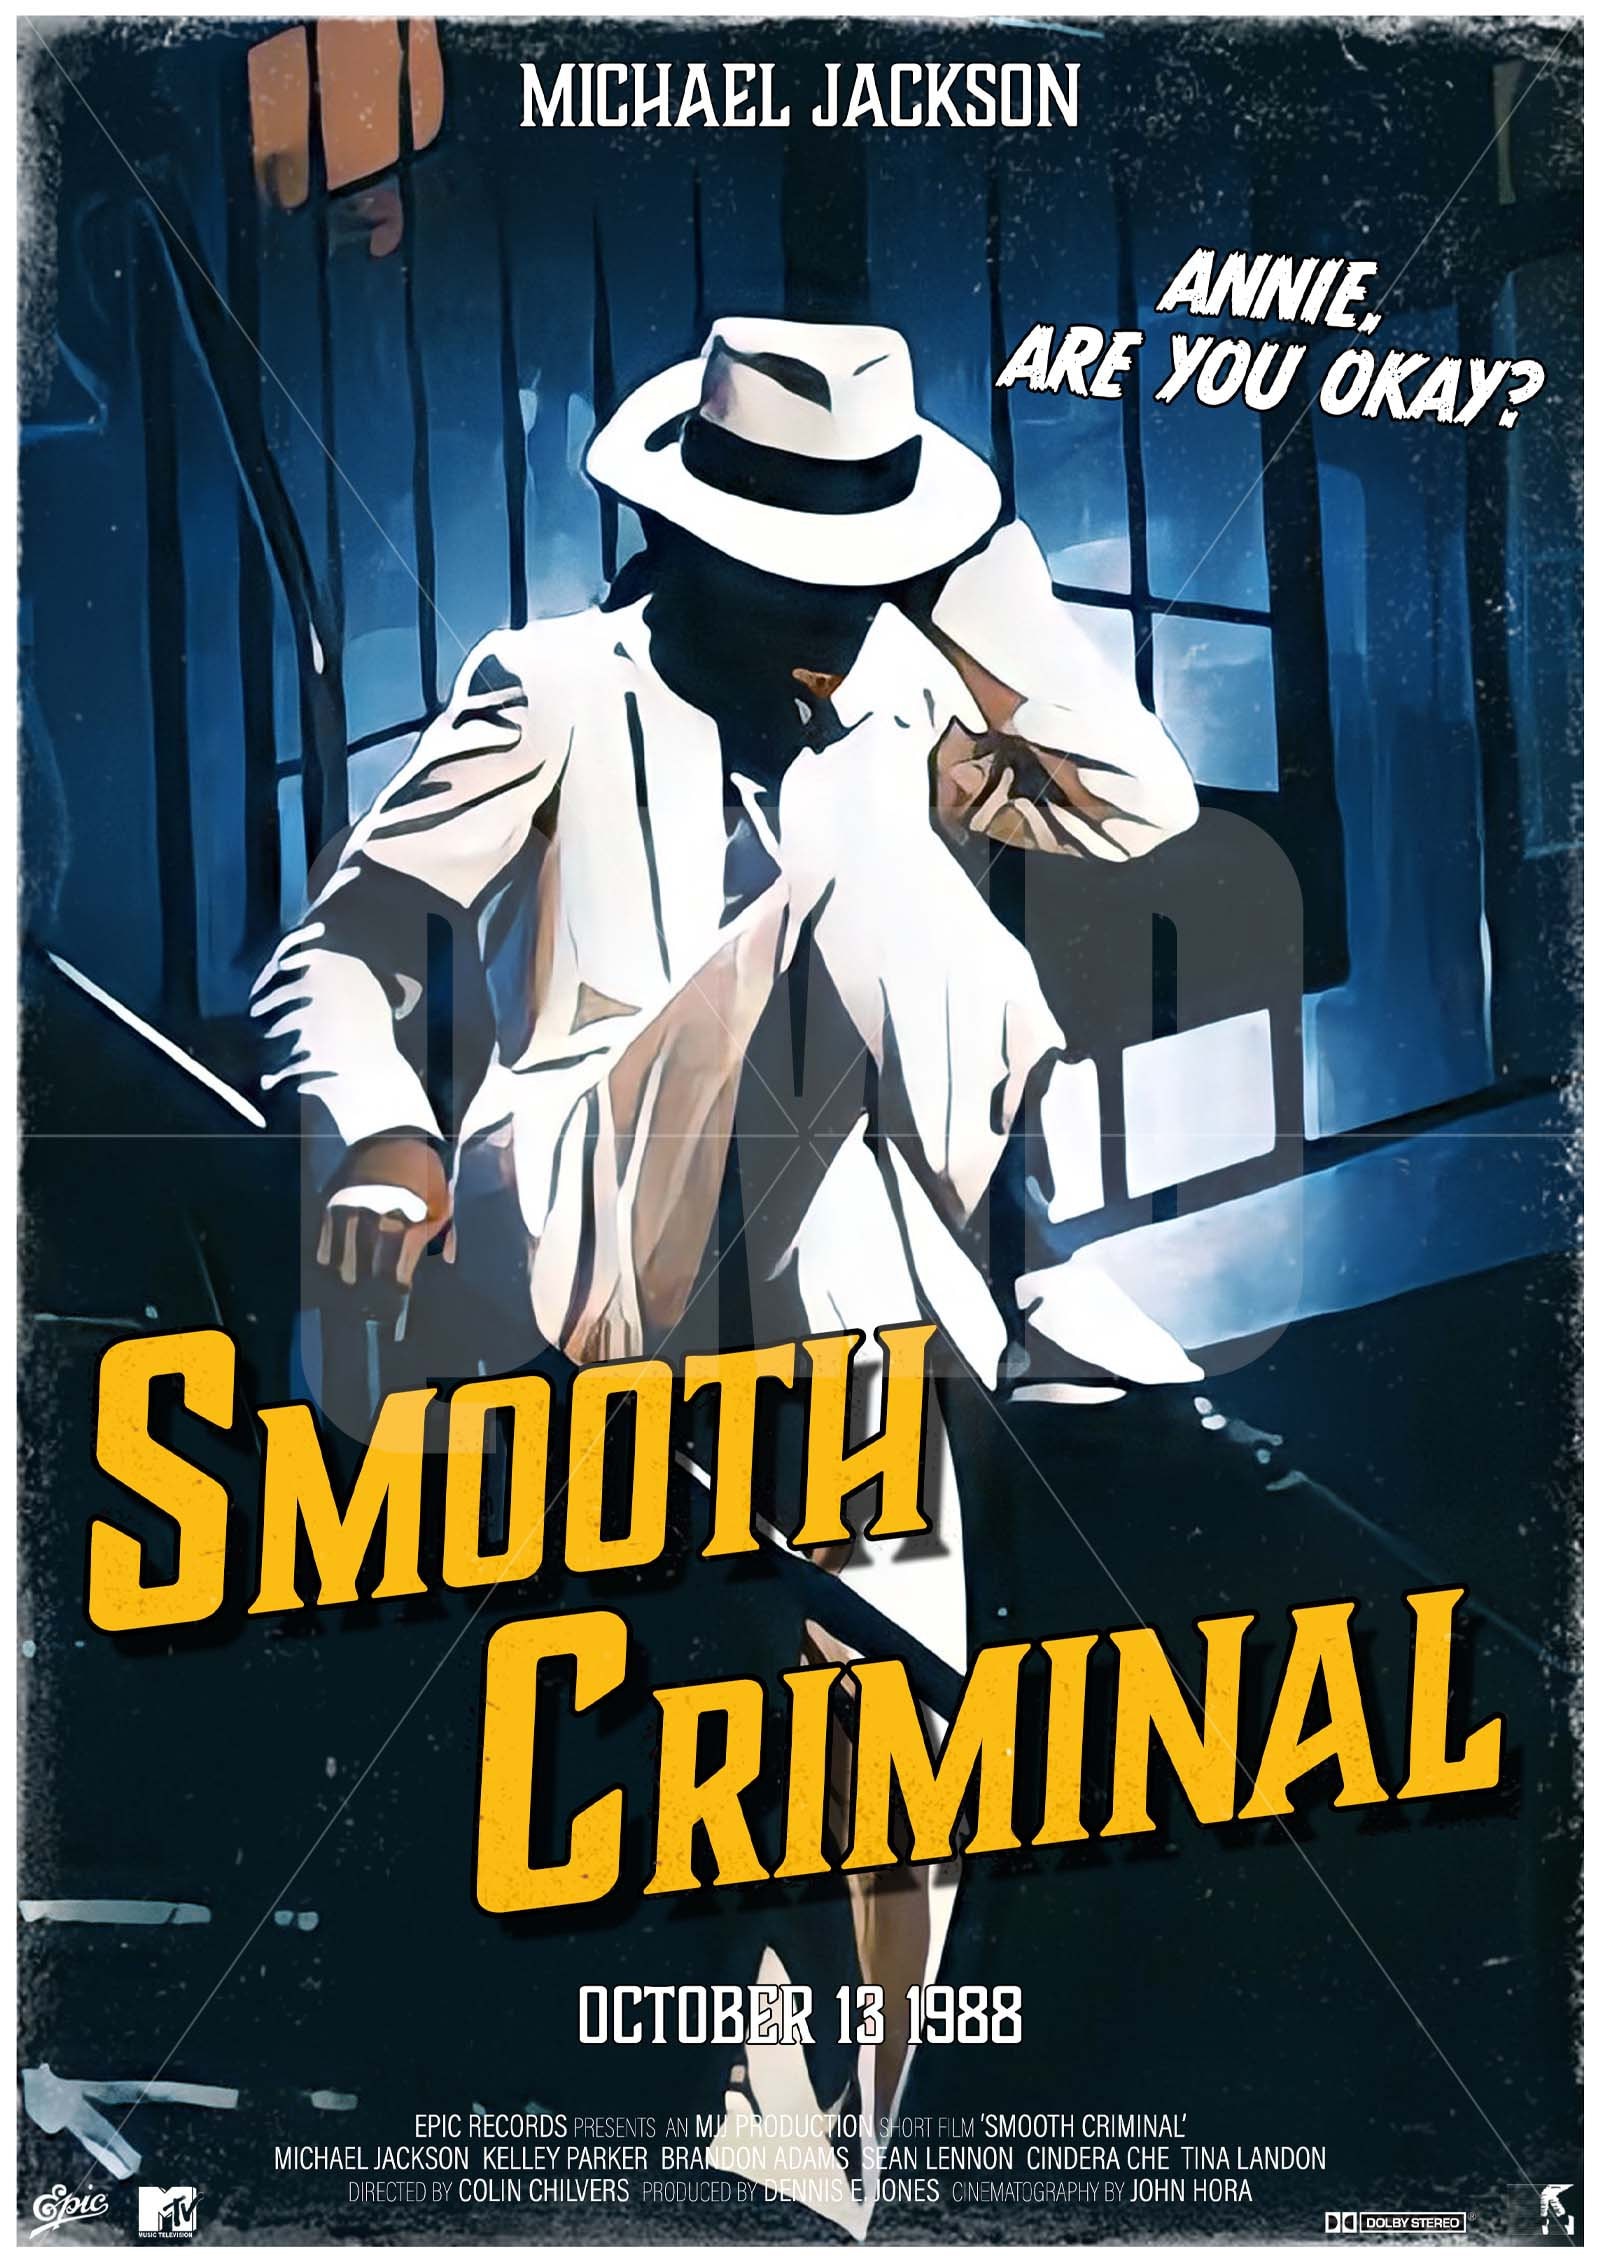 Michael Jackson SMOOTH CRIMINAL Original Poster Art Print - Etsy